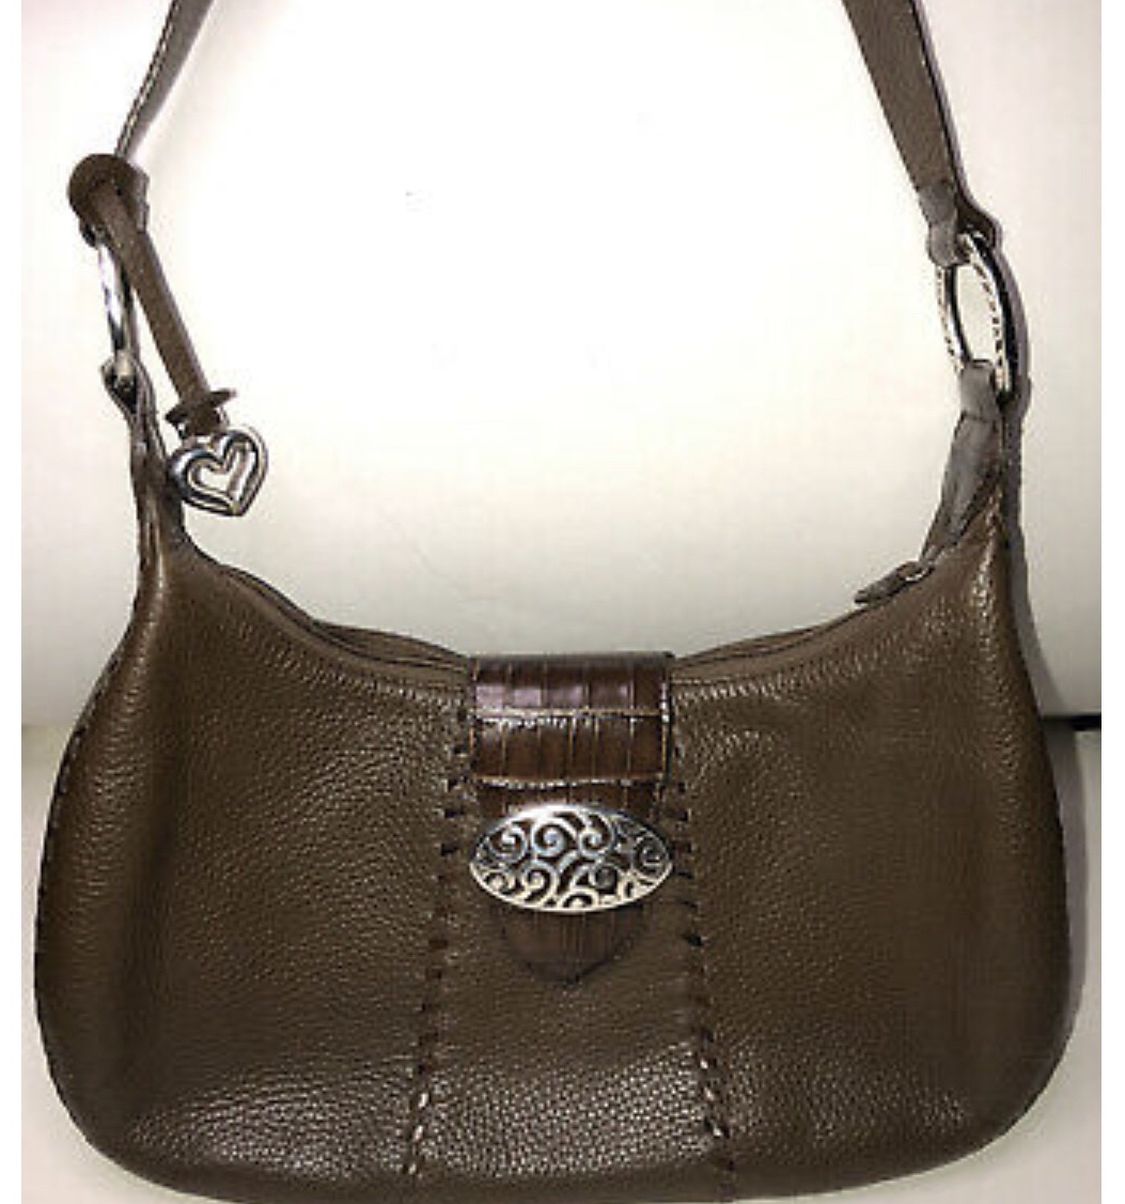 Brighton Leather Handbag Croc Embossed Pebble Heart Ring Strap Hobo Shoulder Bag